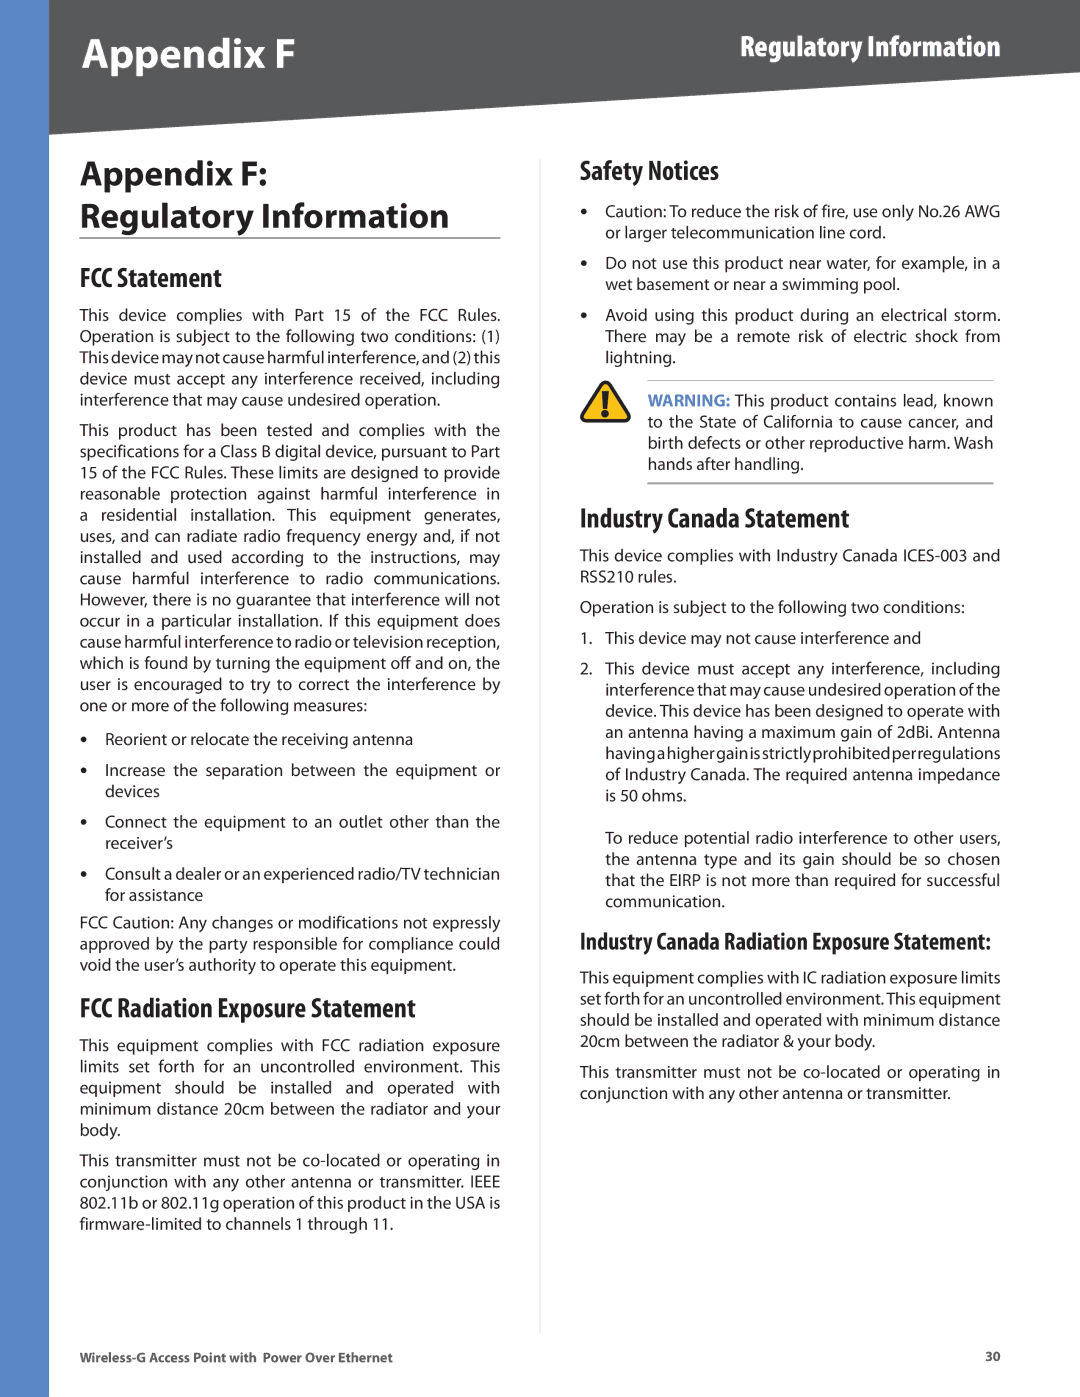 Linksys WAP2000 manual Appendix F, Regulatory Information 